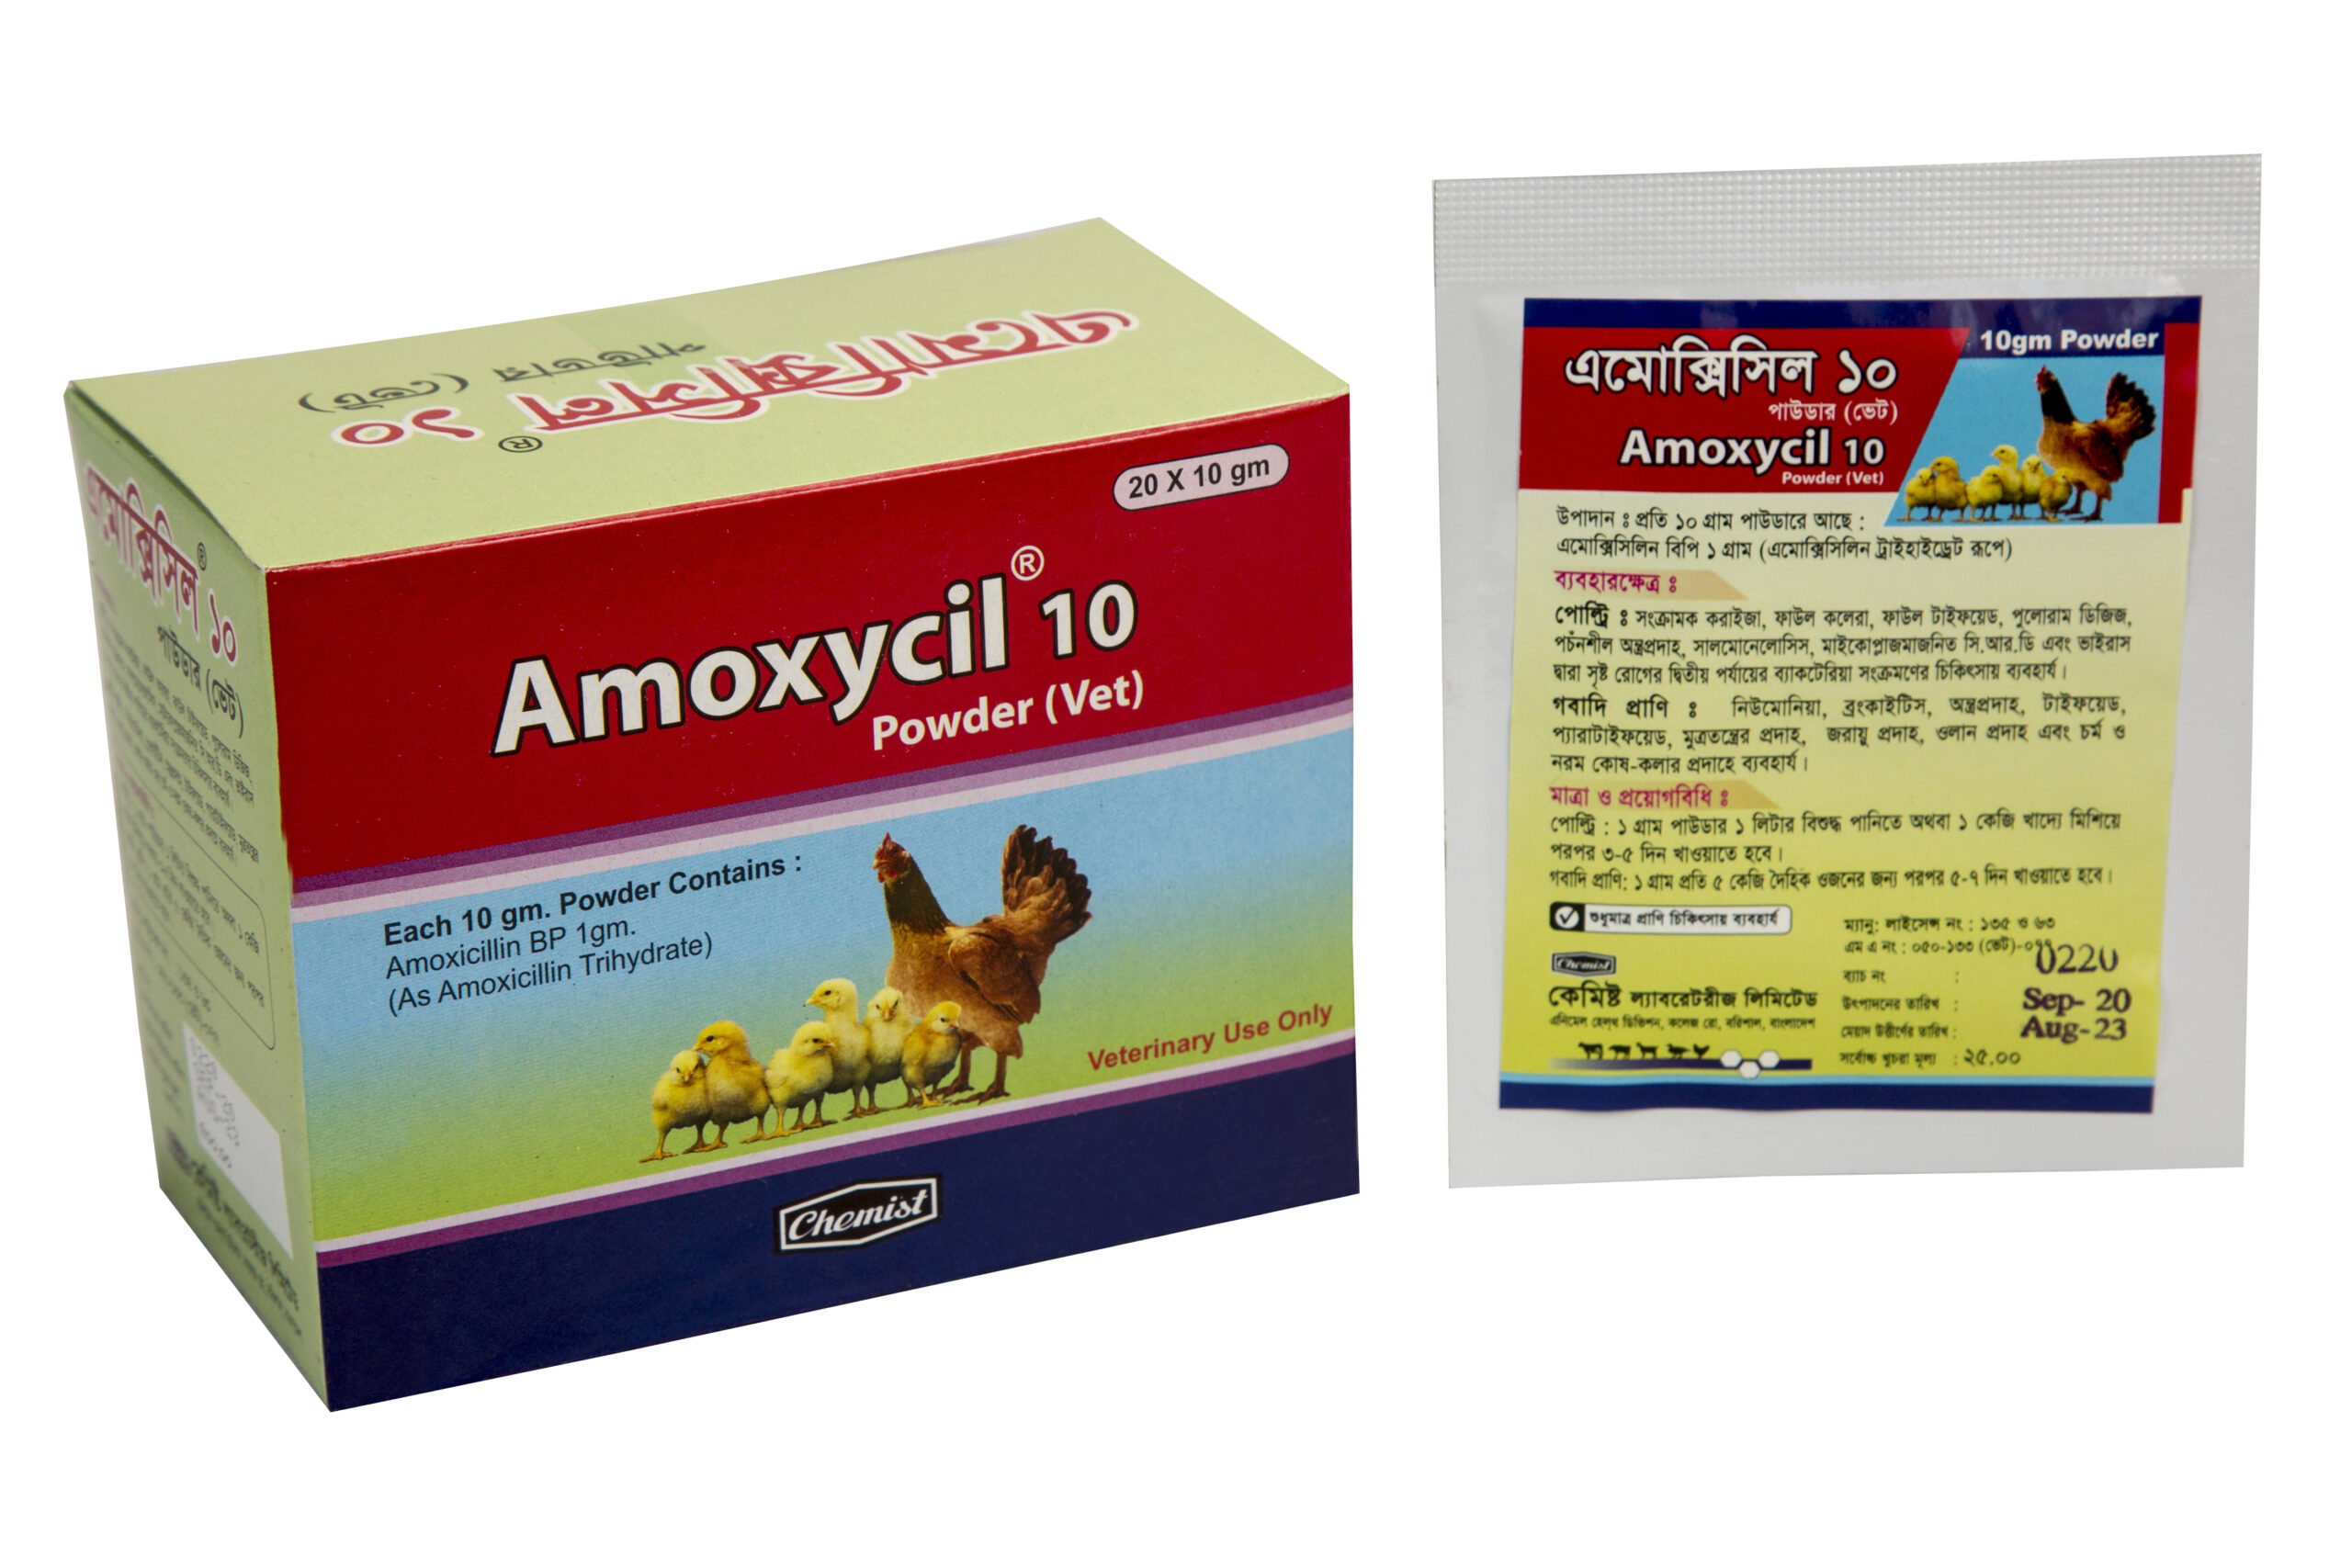 AMOXYCIL-30% POWDER main image